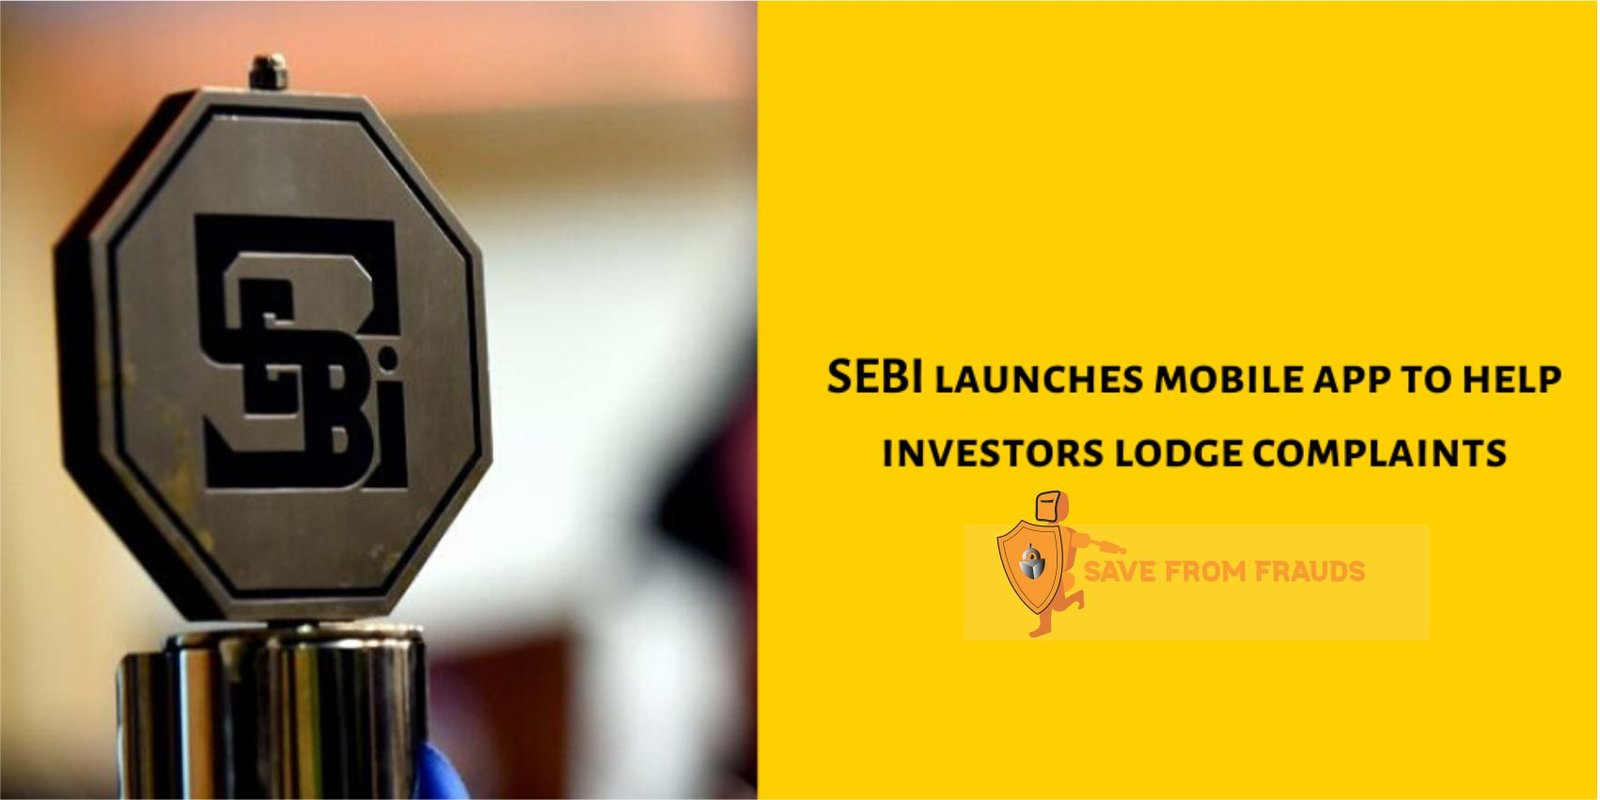 SEBI has launched a smartphone app to assist investors in filing complaints.